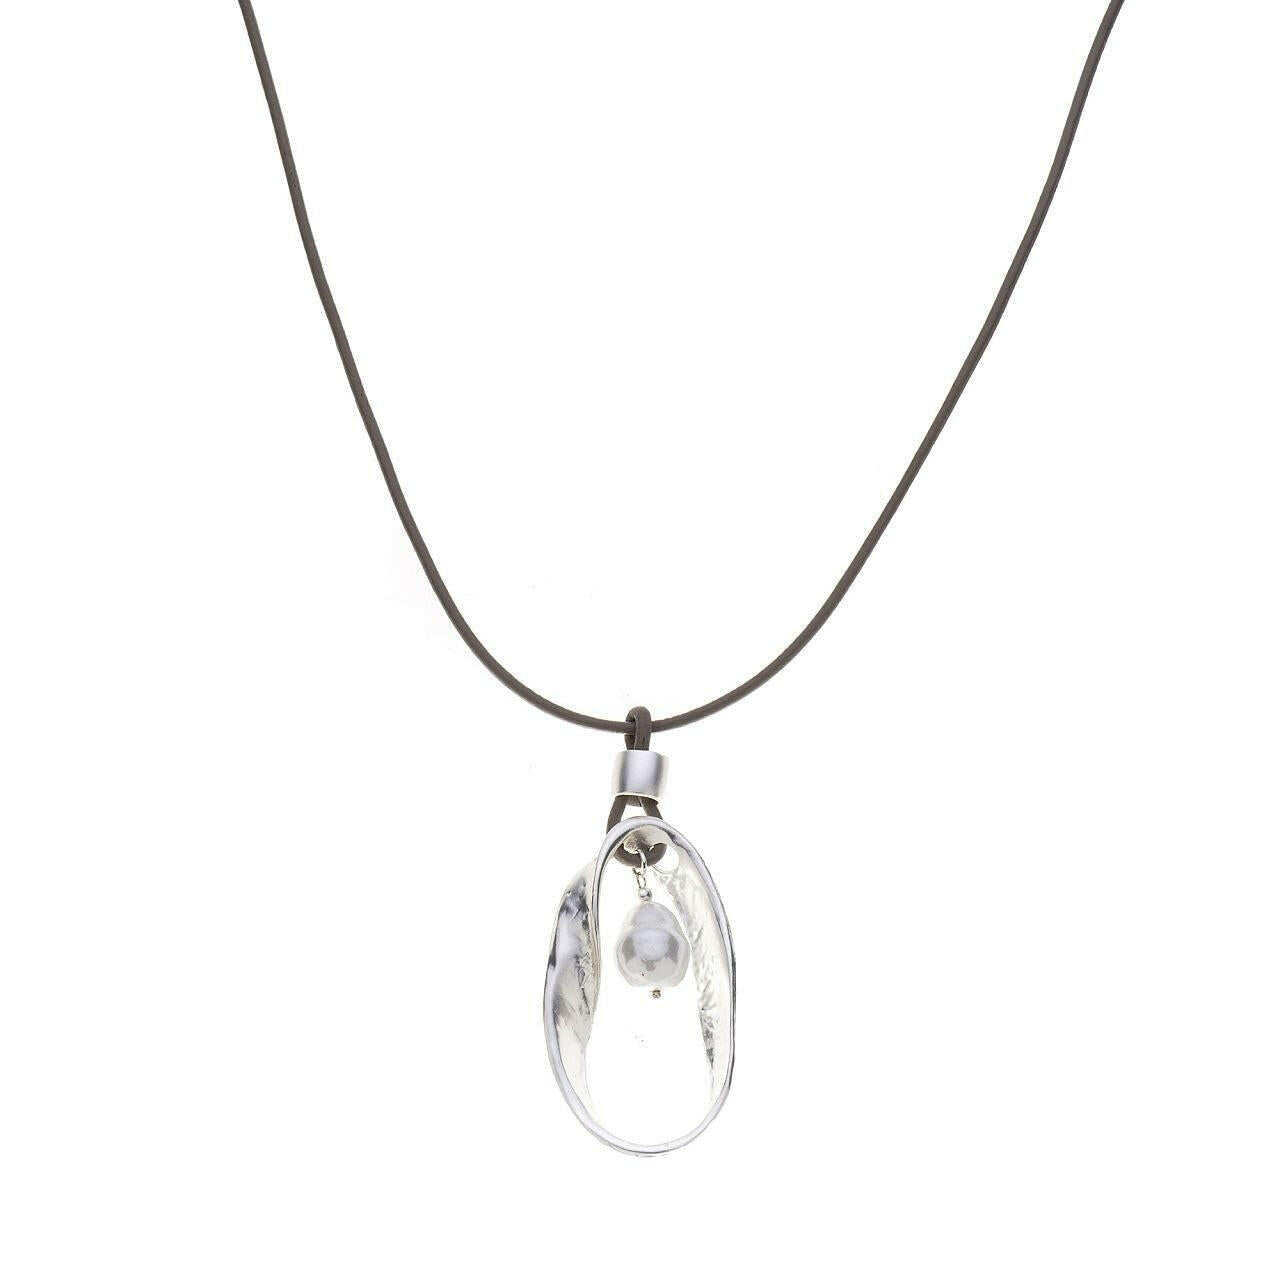 Halskette-Perle im drehendes oval